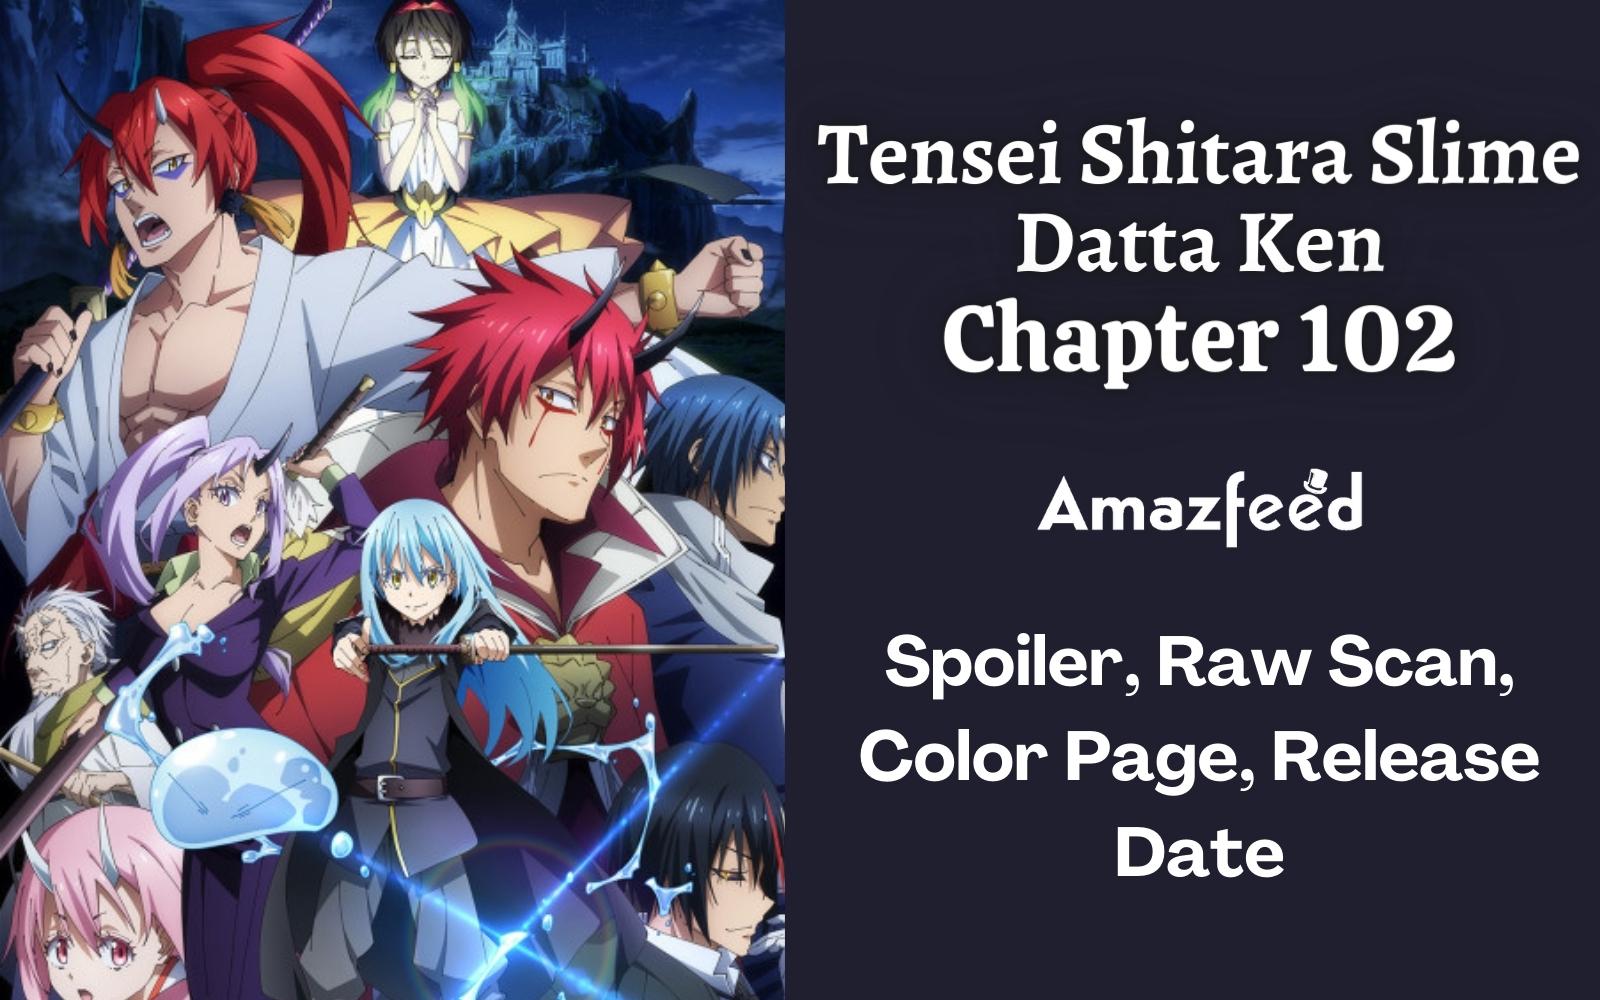 Tensei Shitara Slime Datta Ken Chapter 102 Spoiler, Raw Scan, Color Page, Release Date